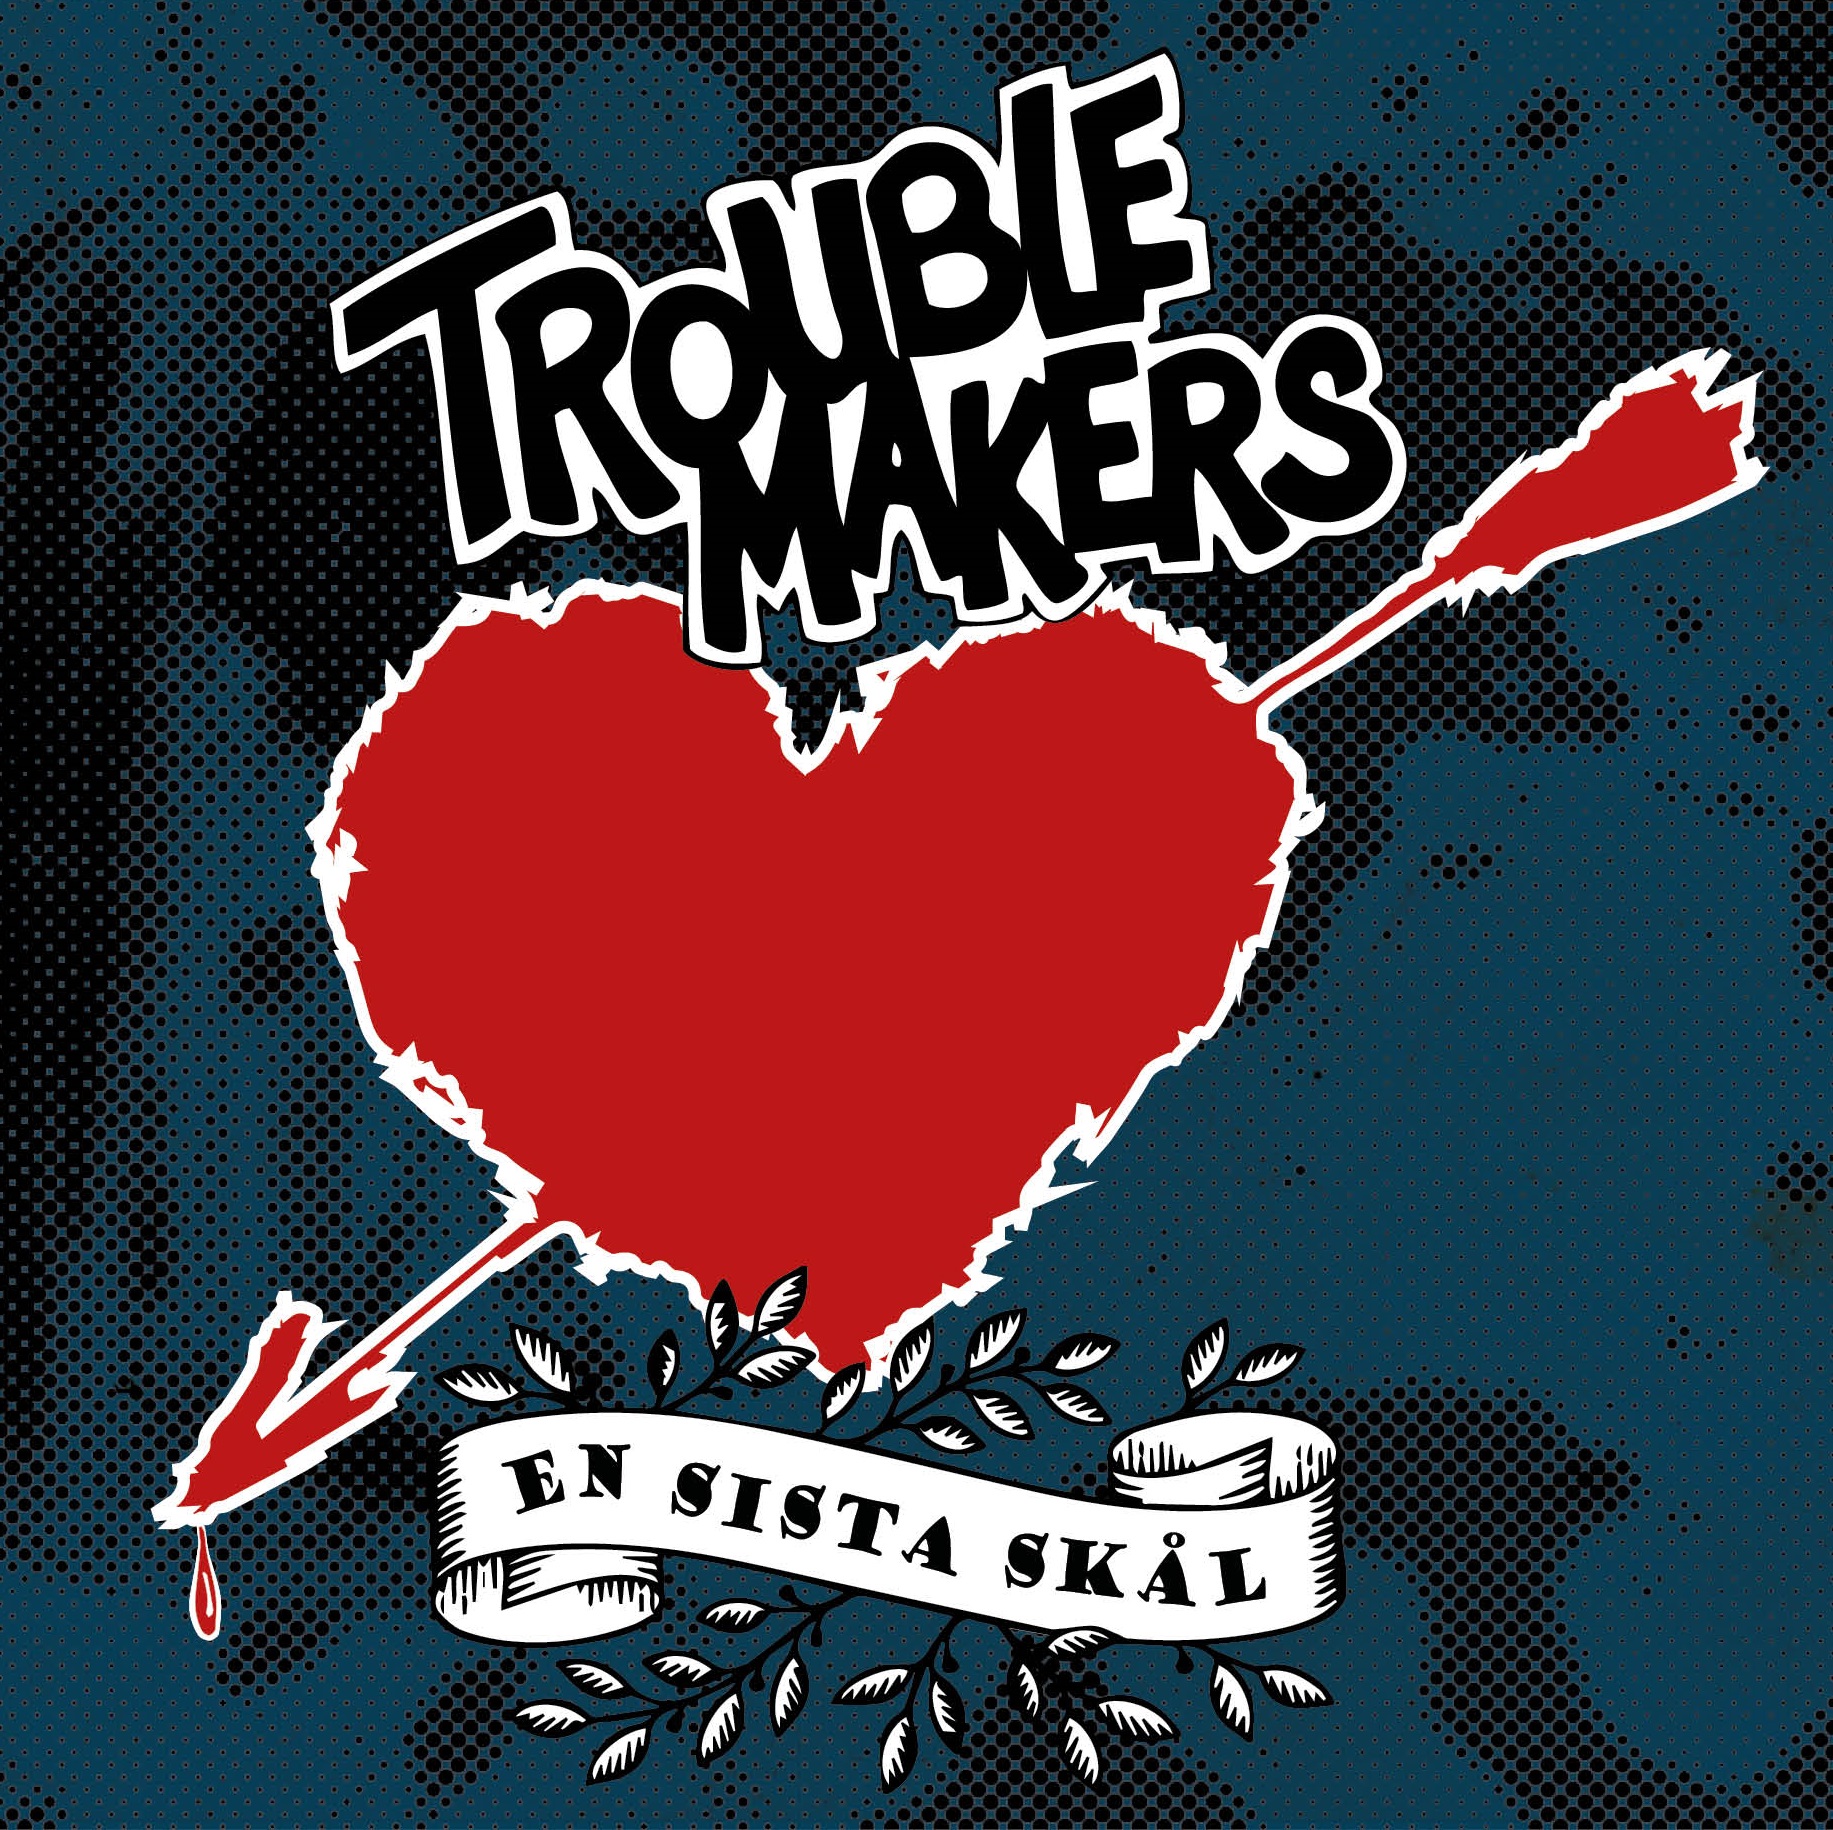 Troublemakers – En Sista Skål